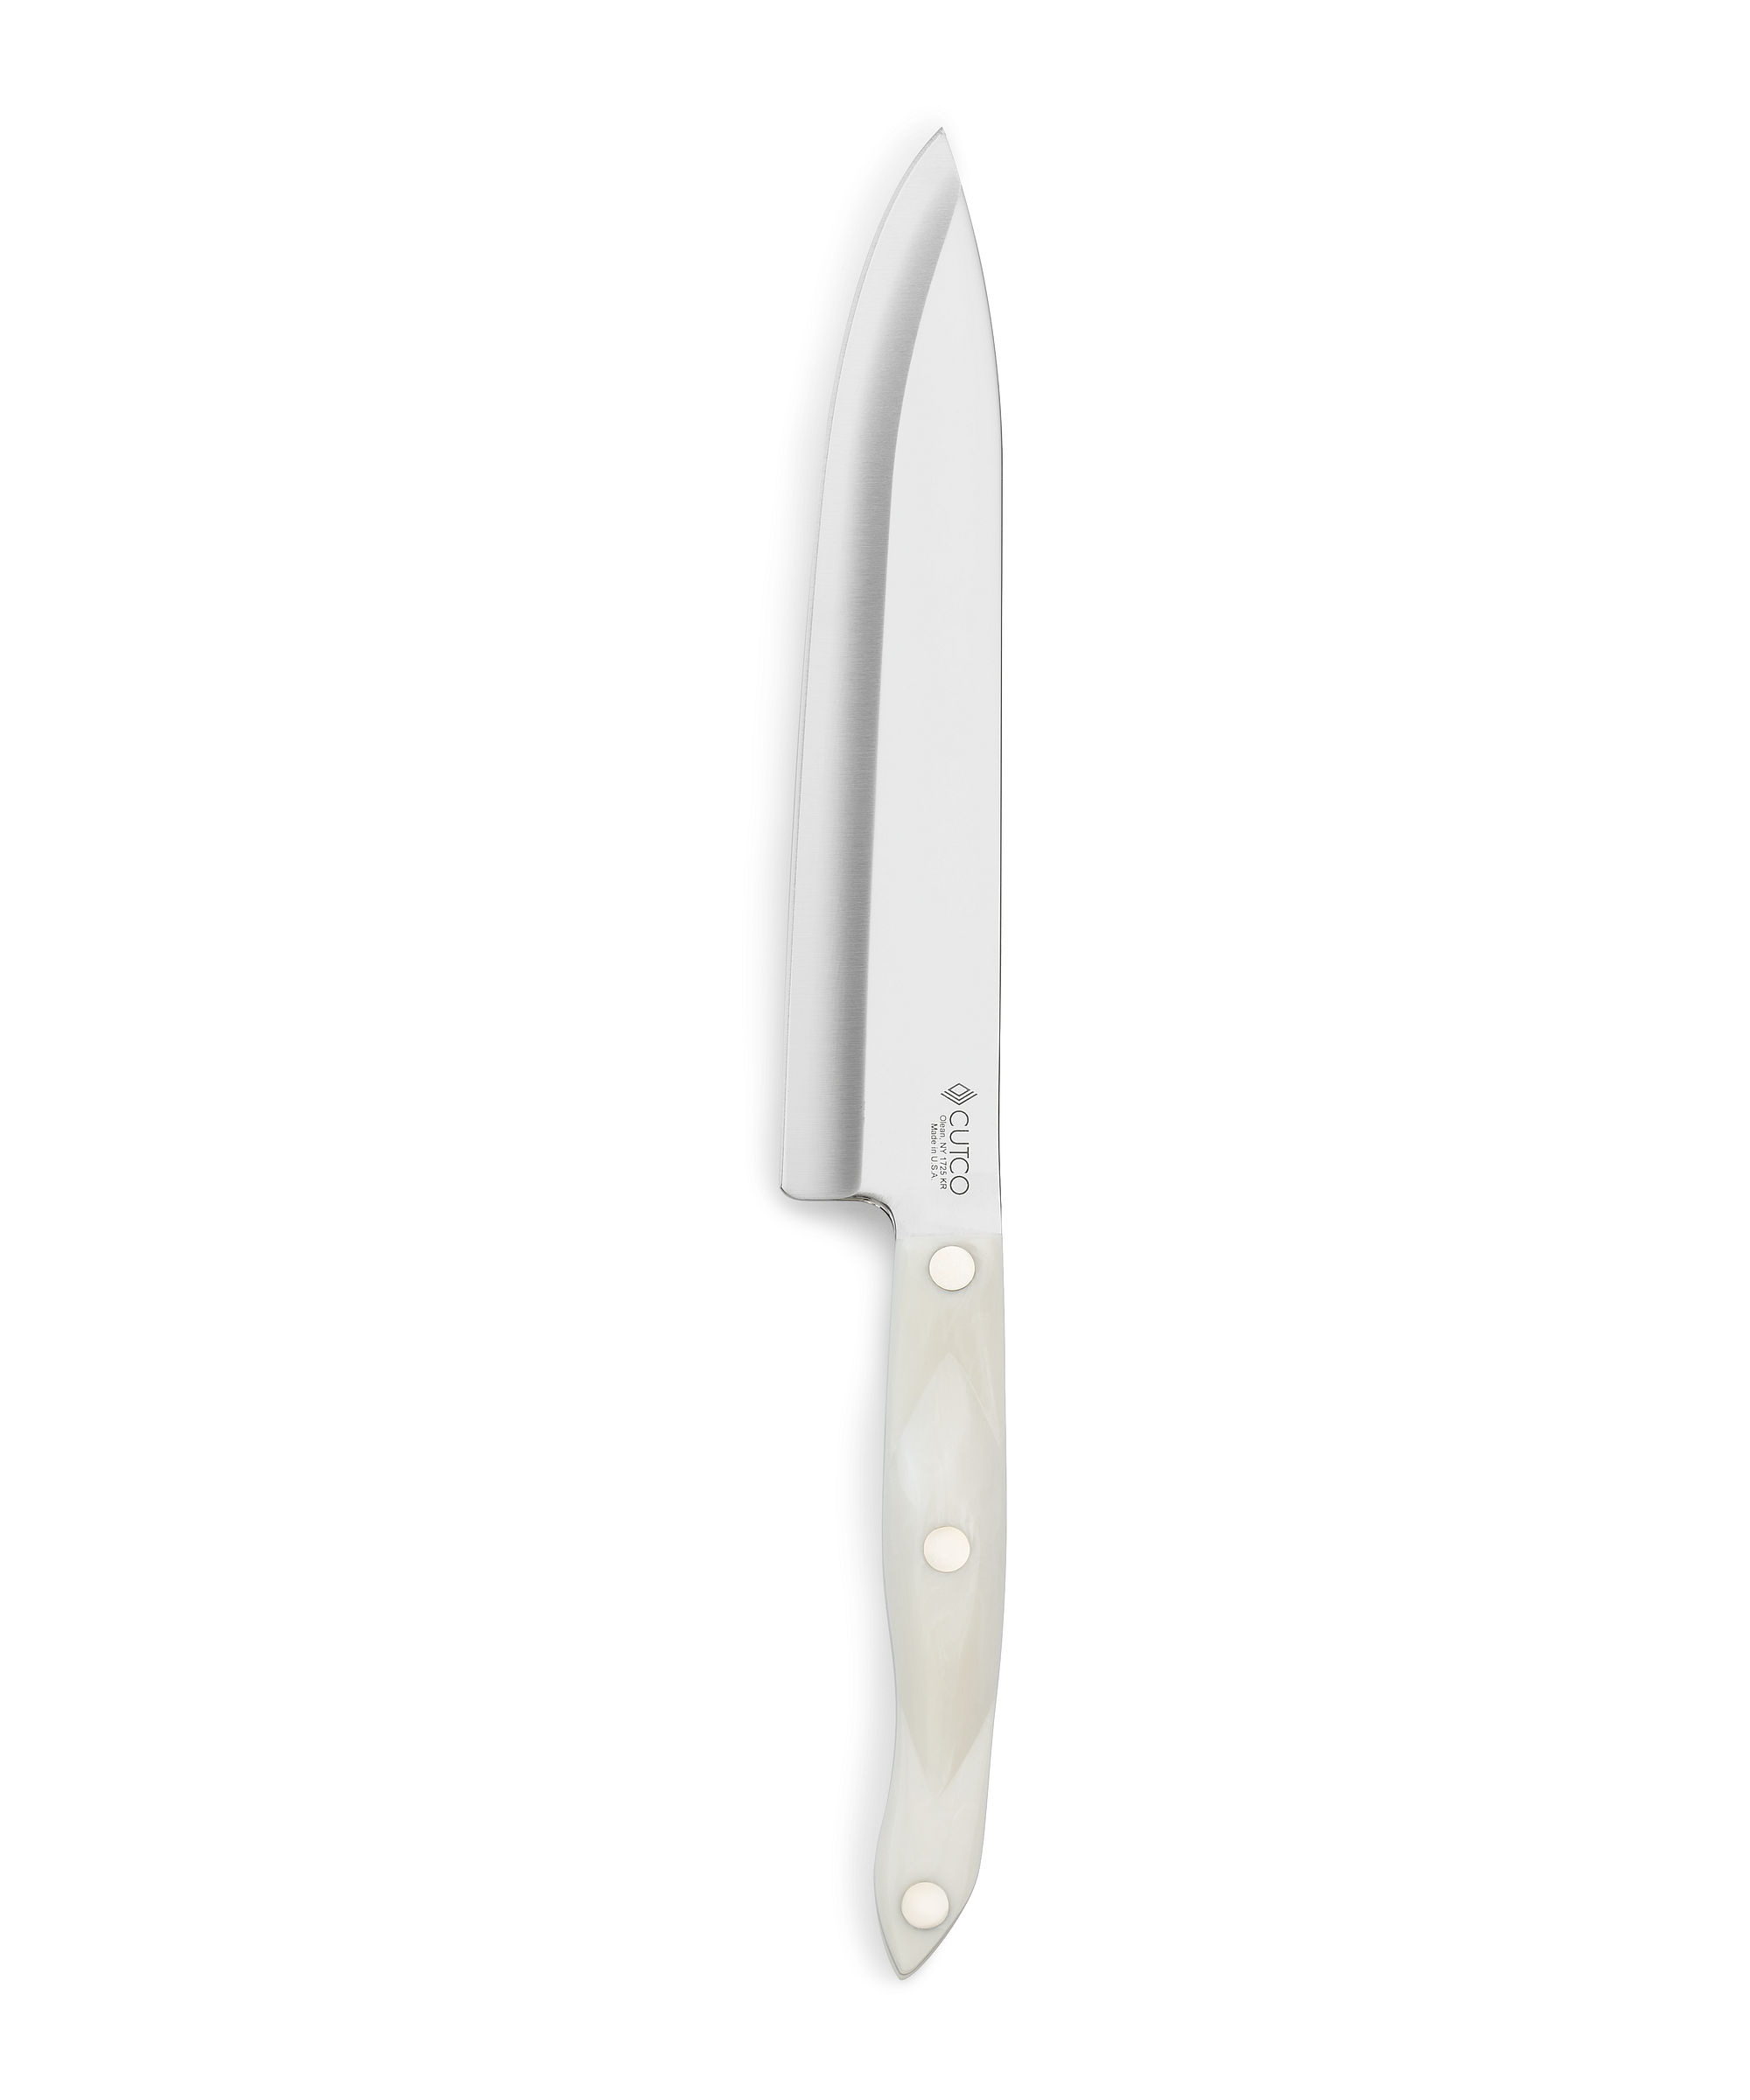  Cutco Chef Knife Vintage 1025 (1725) 9” Blade: Home